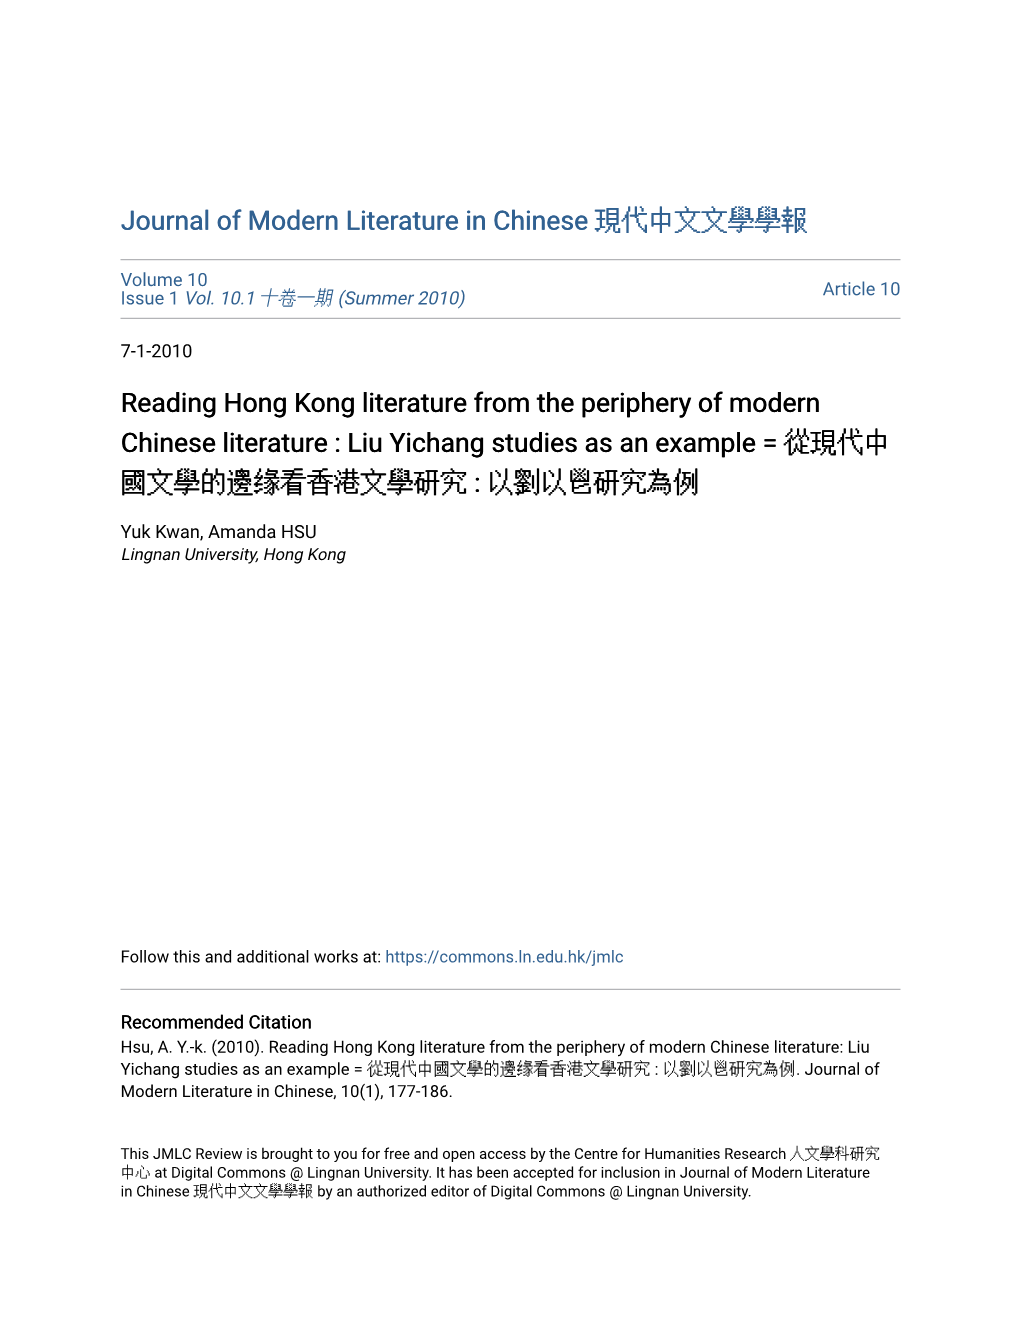 Reading Hong Kong Literature from the Periphery of Modern Chinese Literature : Liu Yichang Studies As an Example = 從現代中 國文學的邊缘看香港文學研究 : 以劉以鬯研究為例